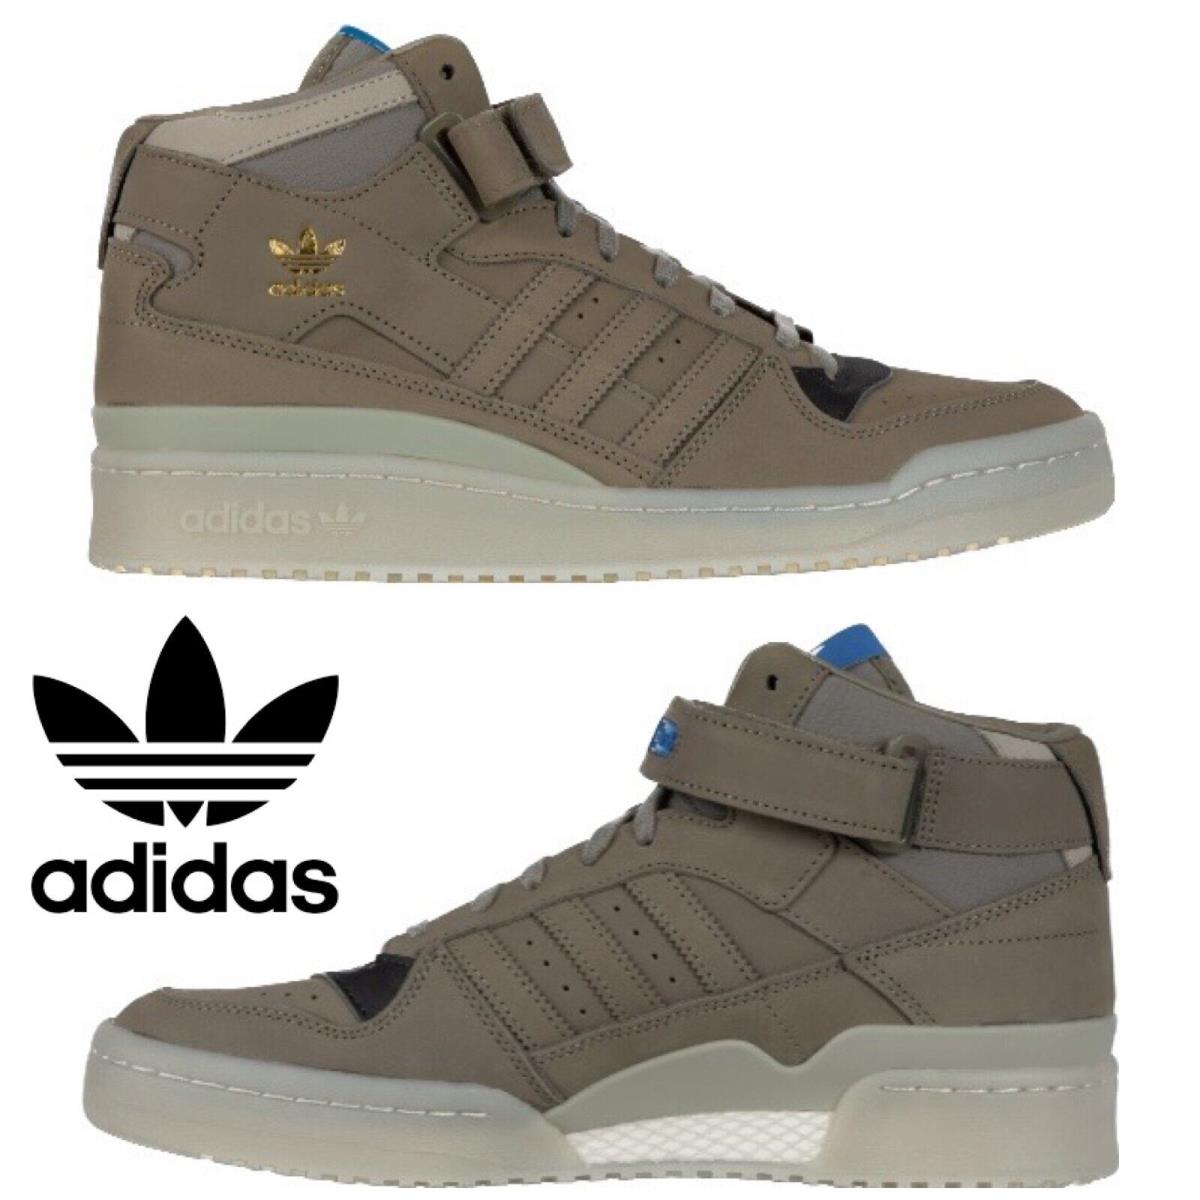 Adidas Originals Forum Mid Men`s Sneakers Comfort Sport Casual Shoes Grey - Gray , Gray/Brown Manufacturer